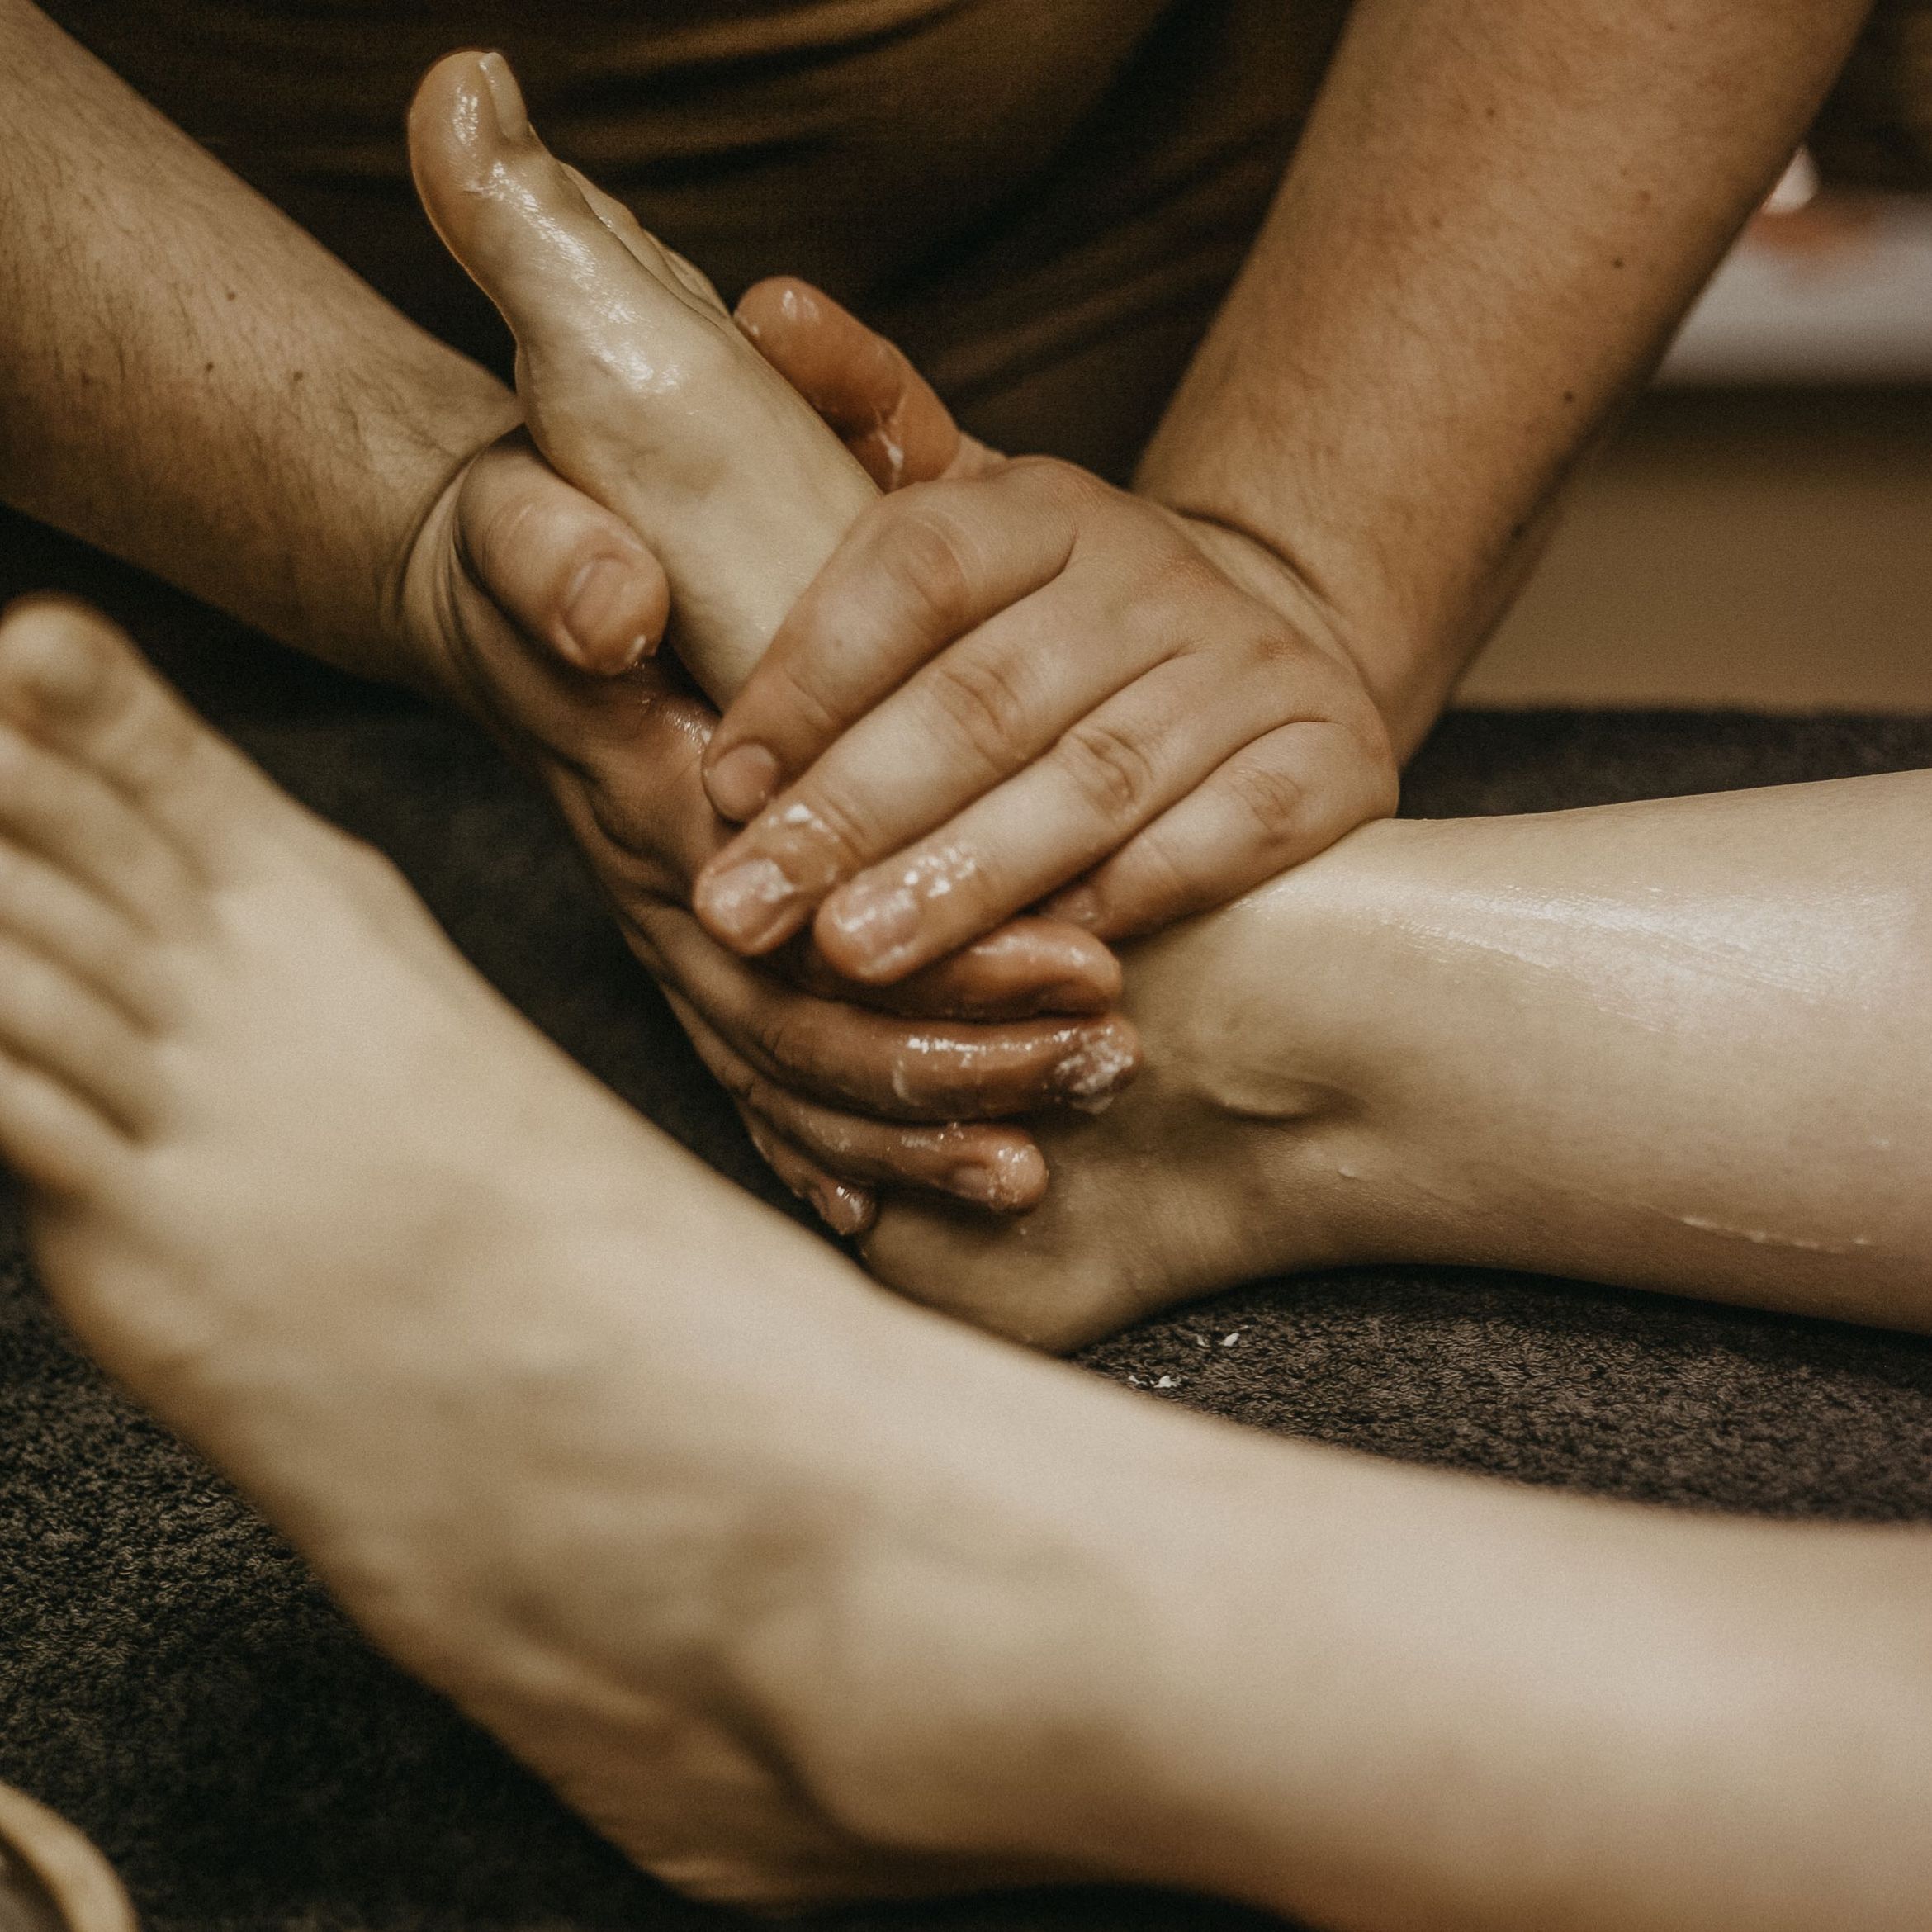 Portfolio usługi Tajski masaż stóp